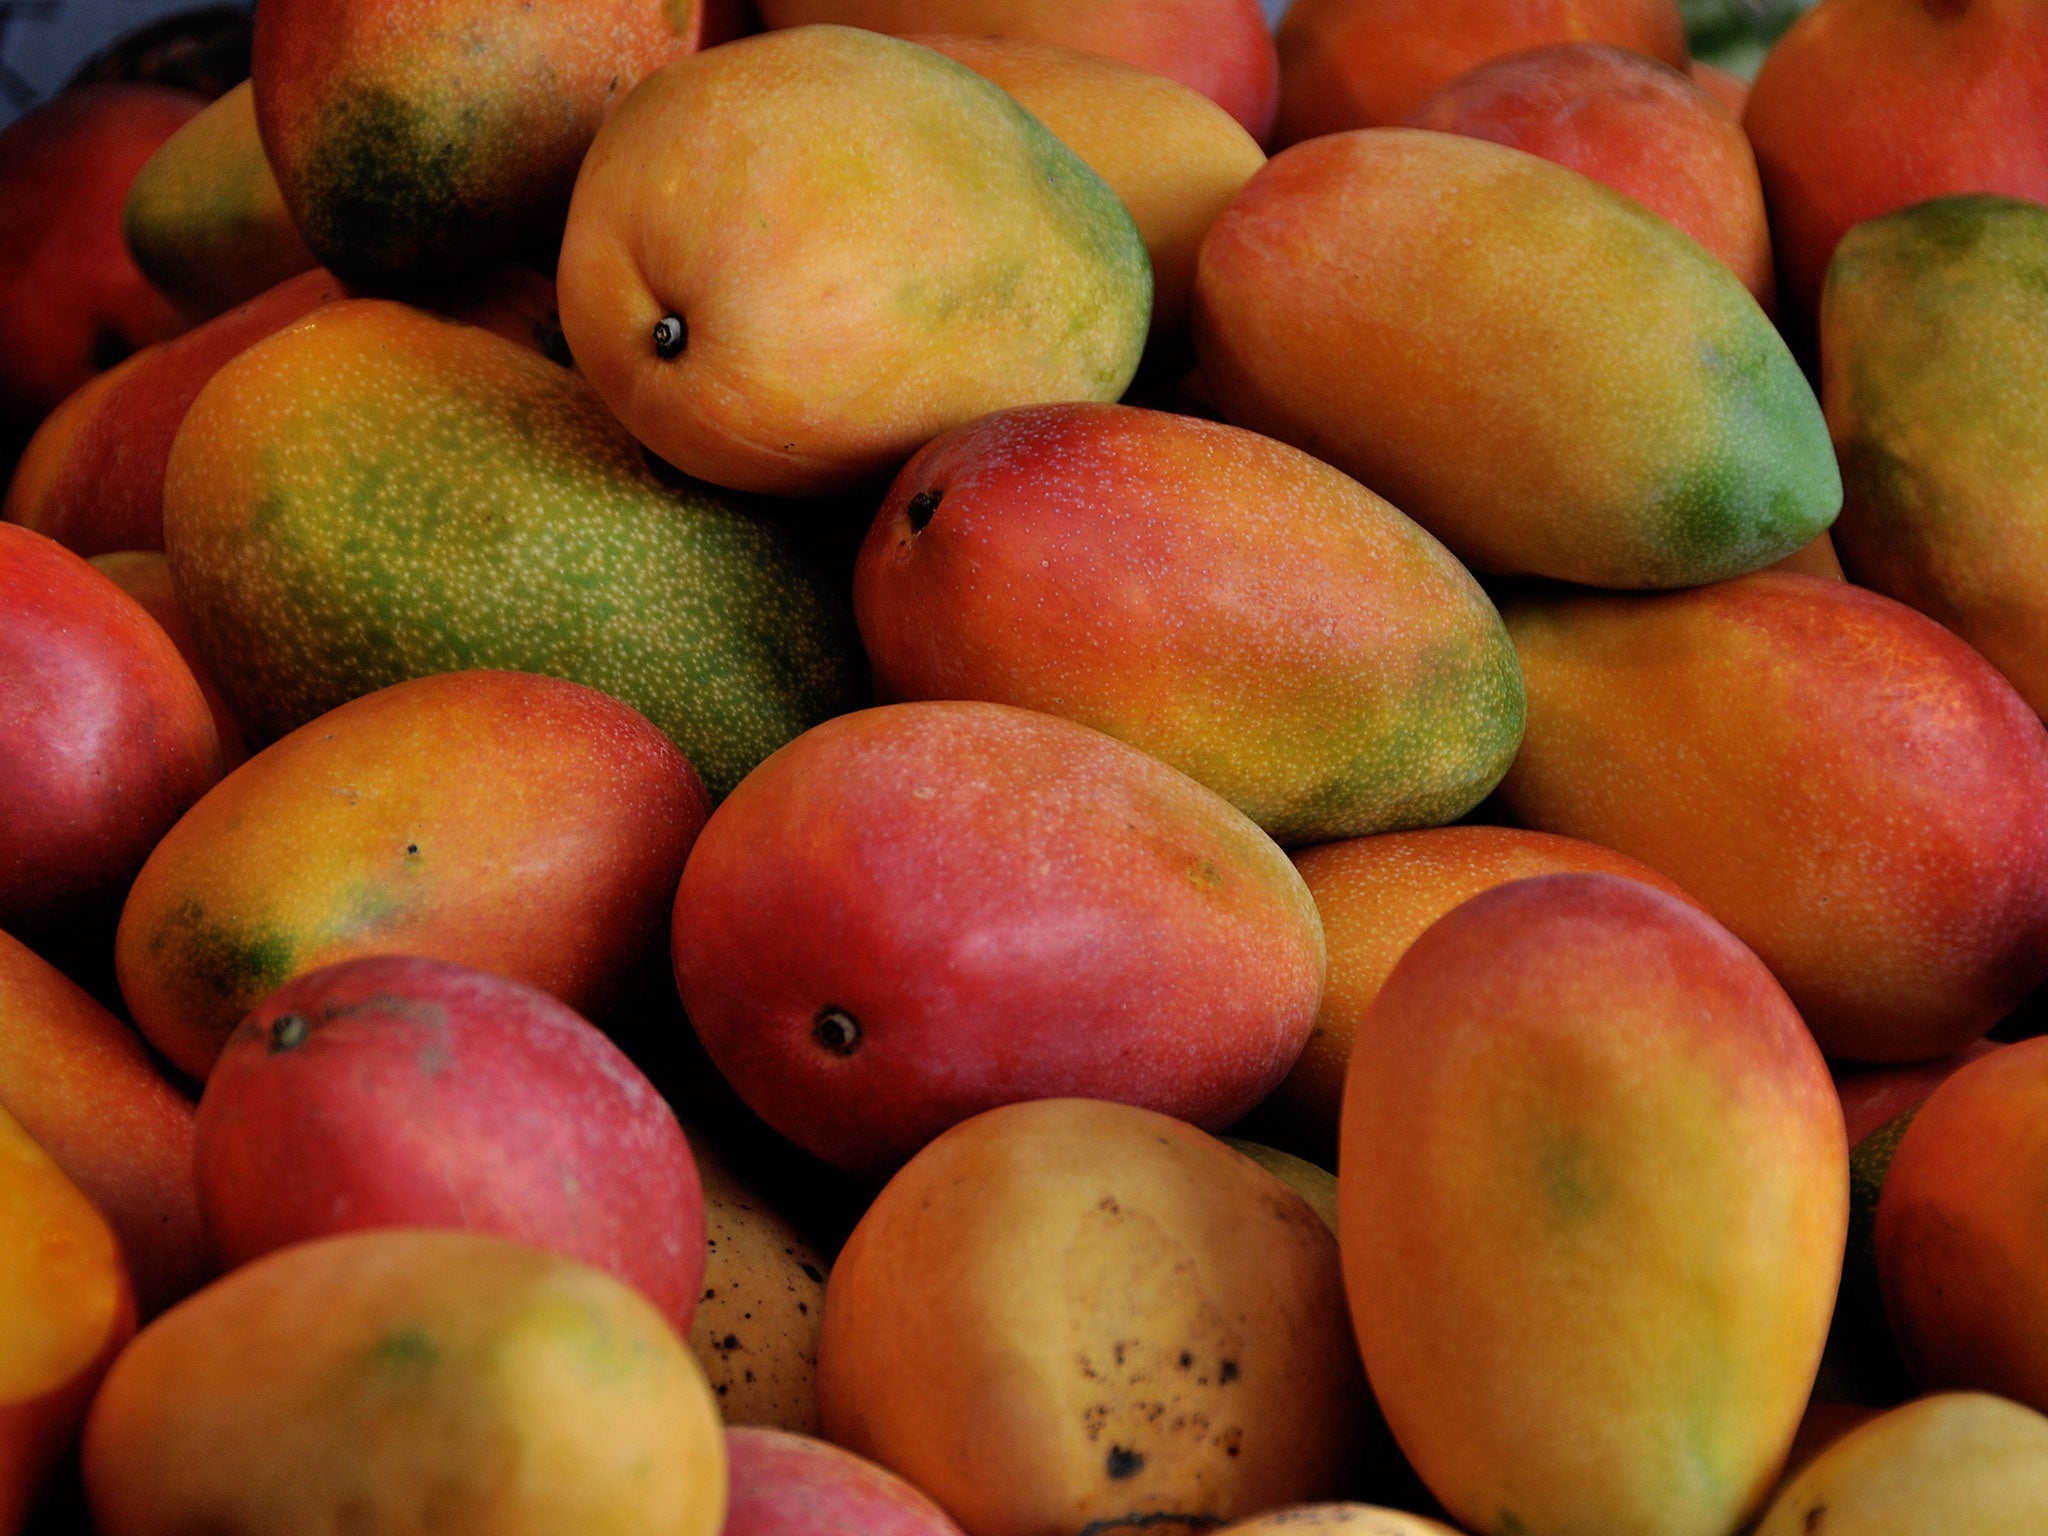 Bihar is a major producer of mangoes 